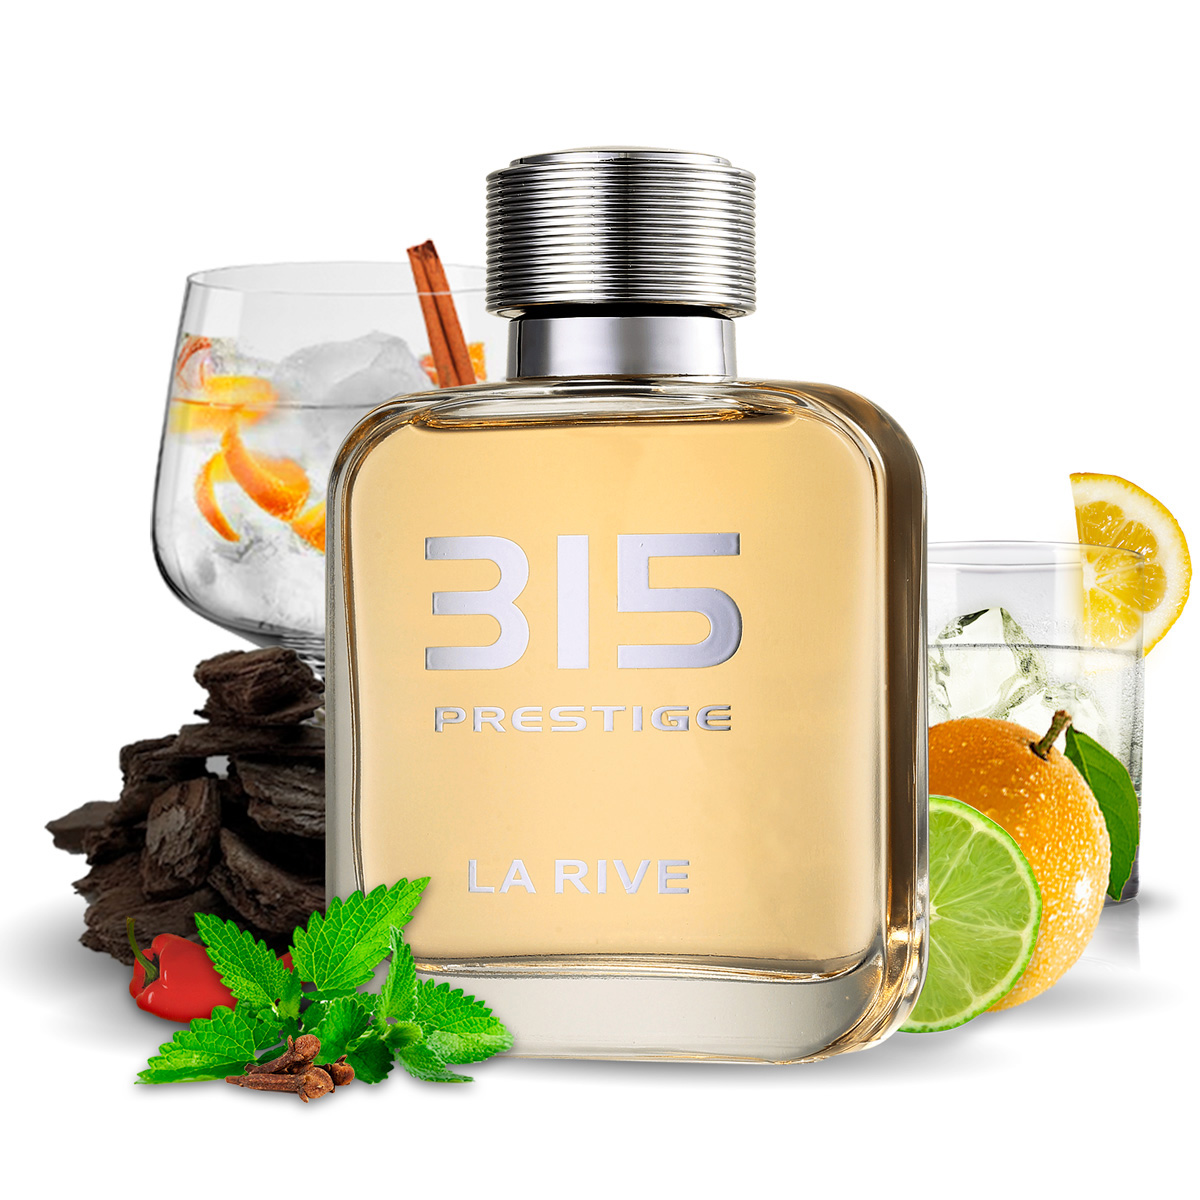 Perfume Prestige 315 Masculino Edt 100ml La Rive  - Mercari Perfumes